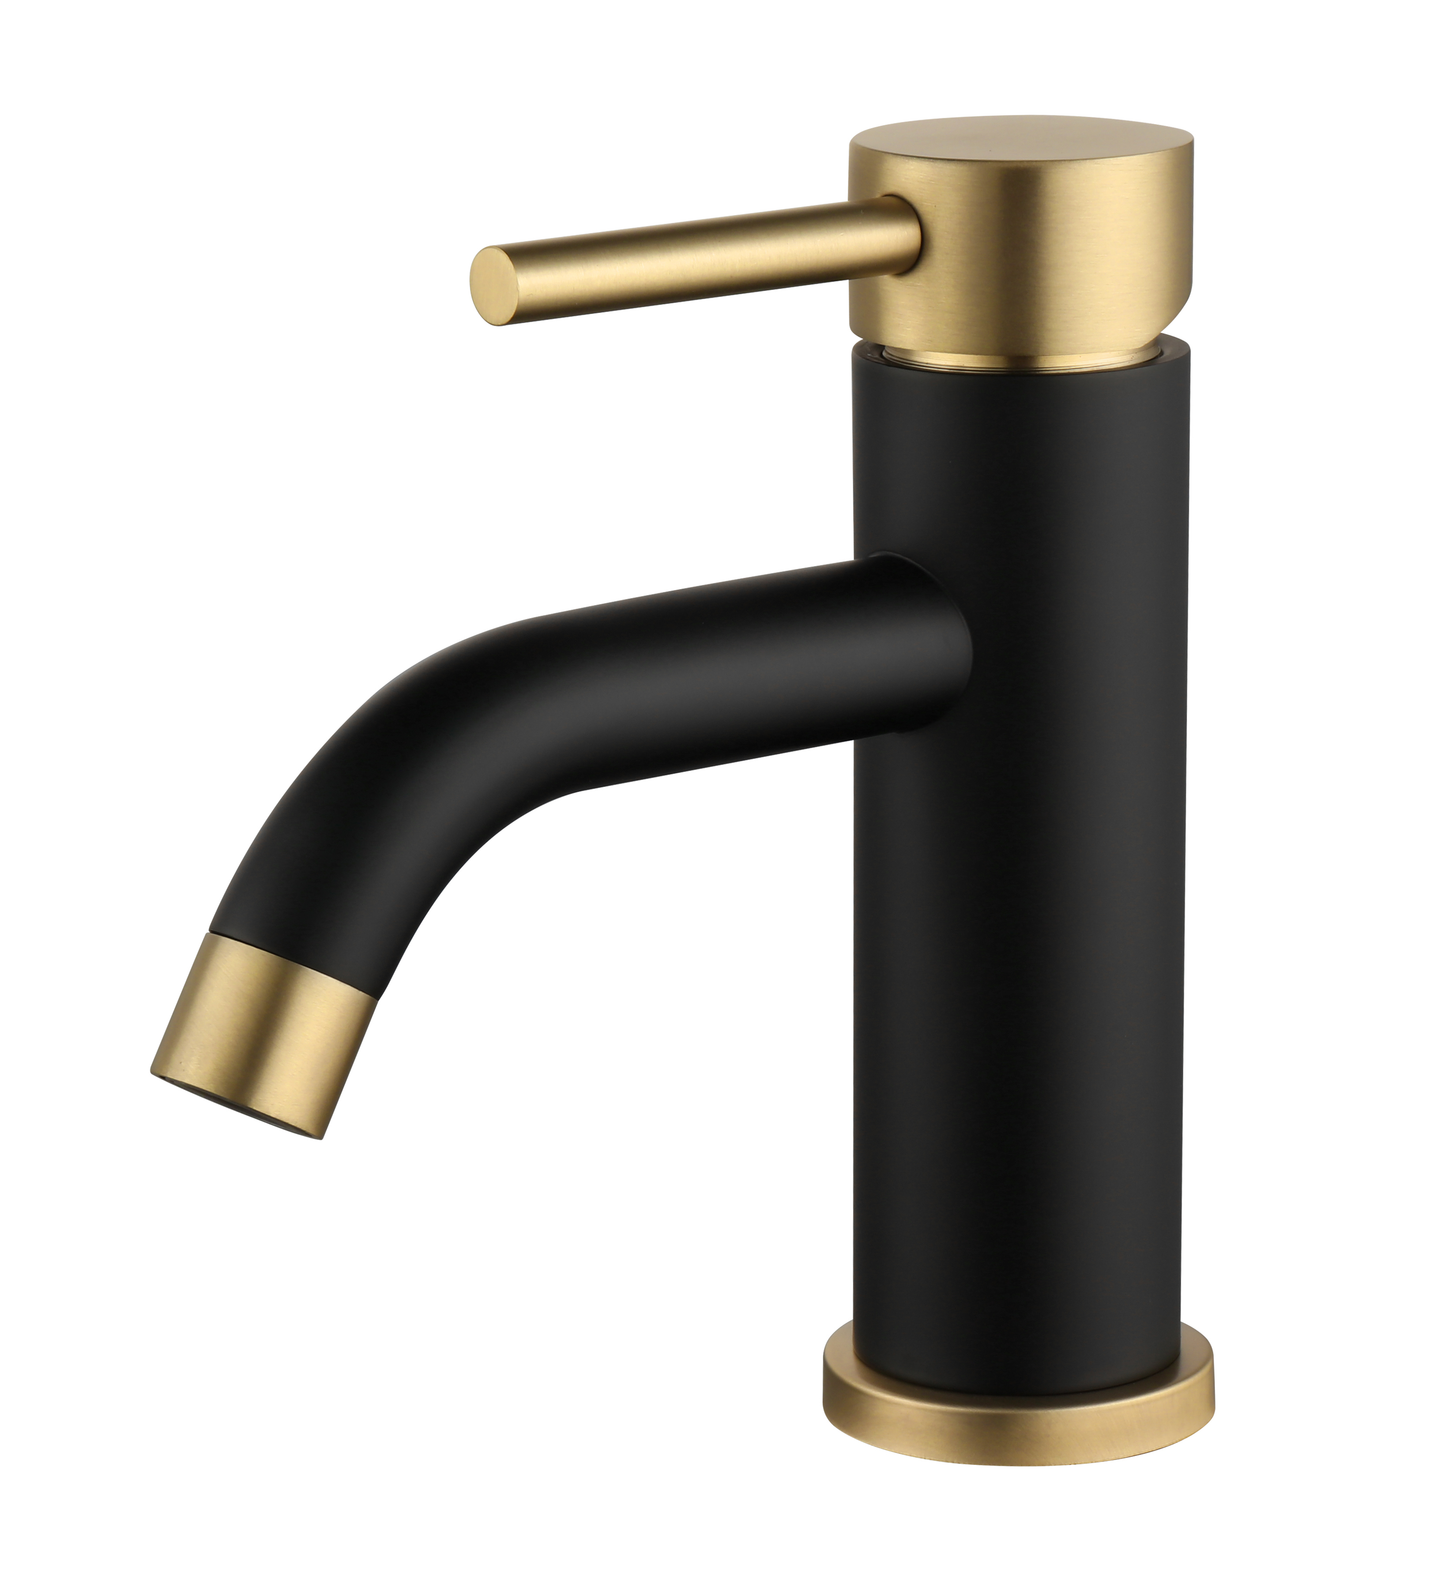 HL608GD Gold and black bathroom faucet basin faucet $39/pc